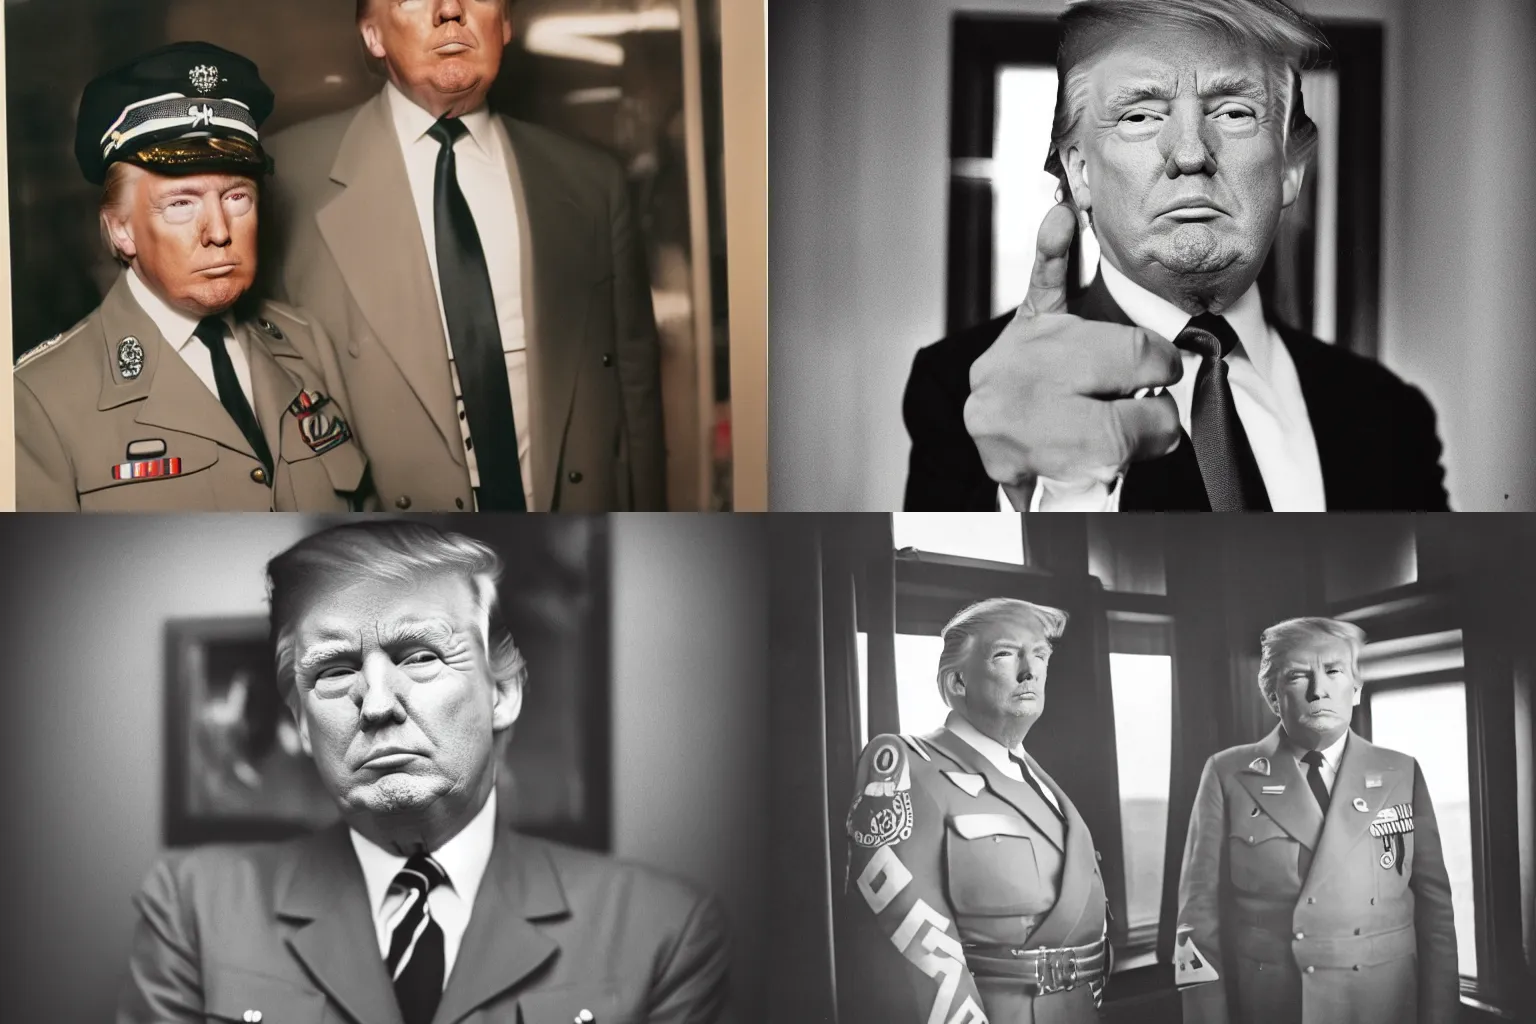 Prompt: portrait photograph of Donald Trump wearing Reichsführer outfit, off-camera flash, canon 35mm lens f8 aperture, color Ektachrome photograph, single point of light coming through window,